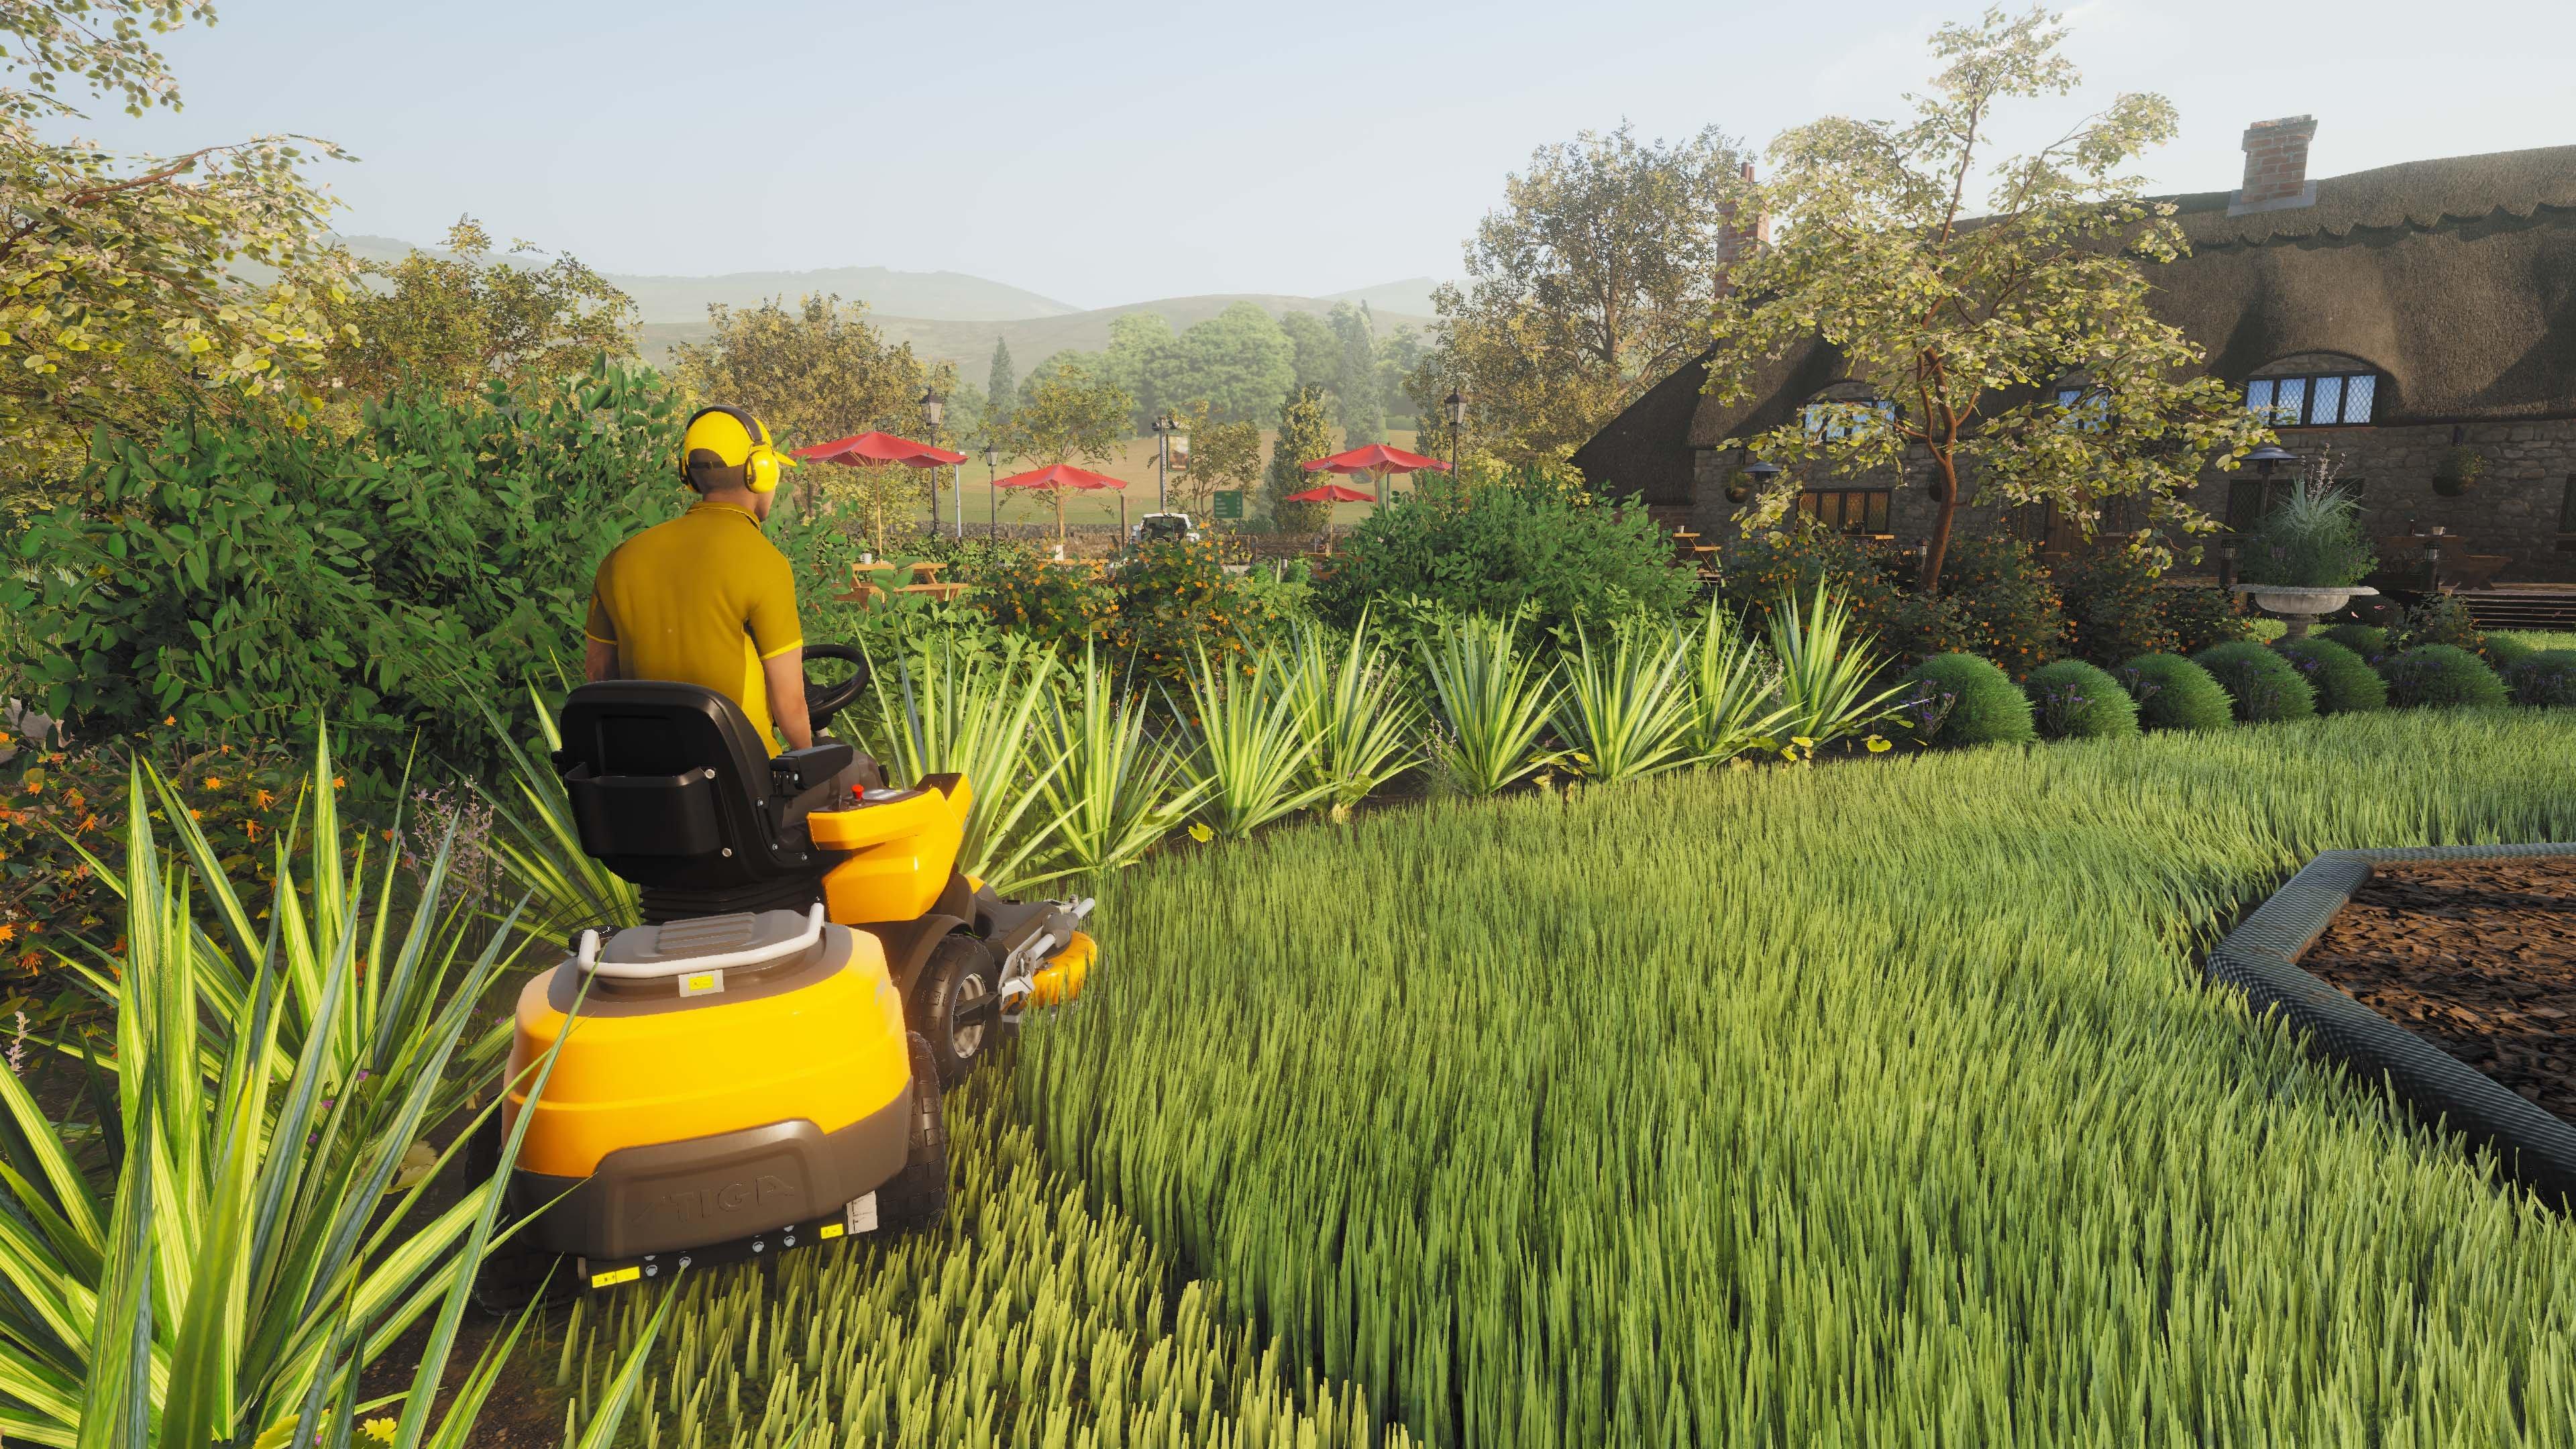 Lawn Mowing Simulator Landmark Edition - PlayStation 4